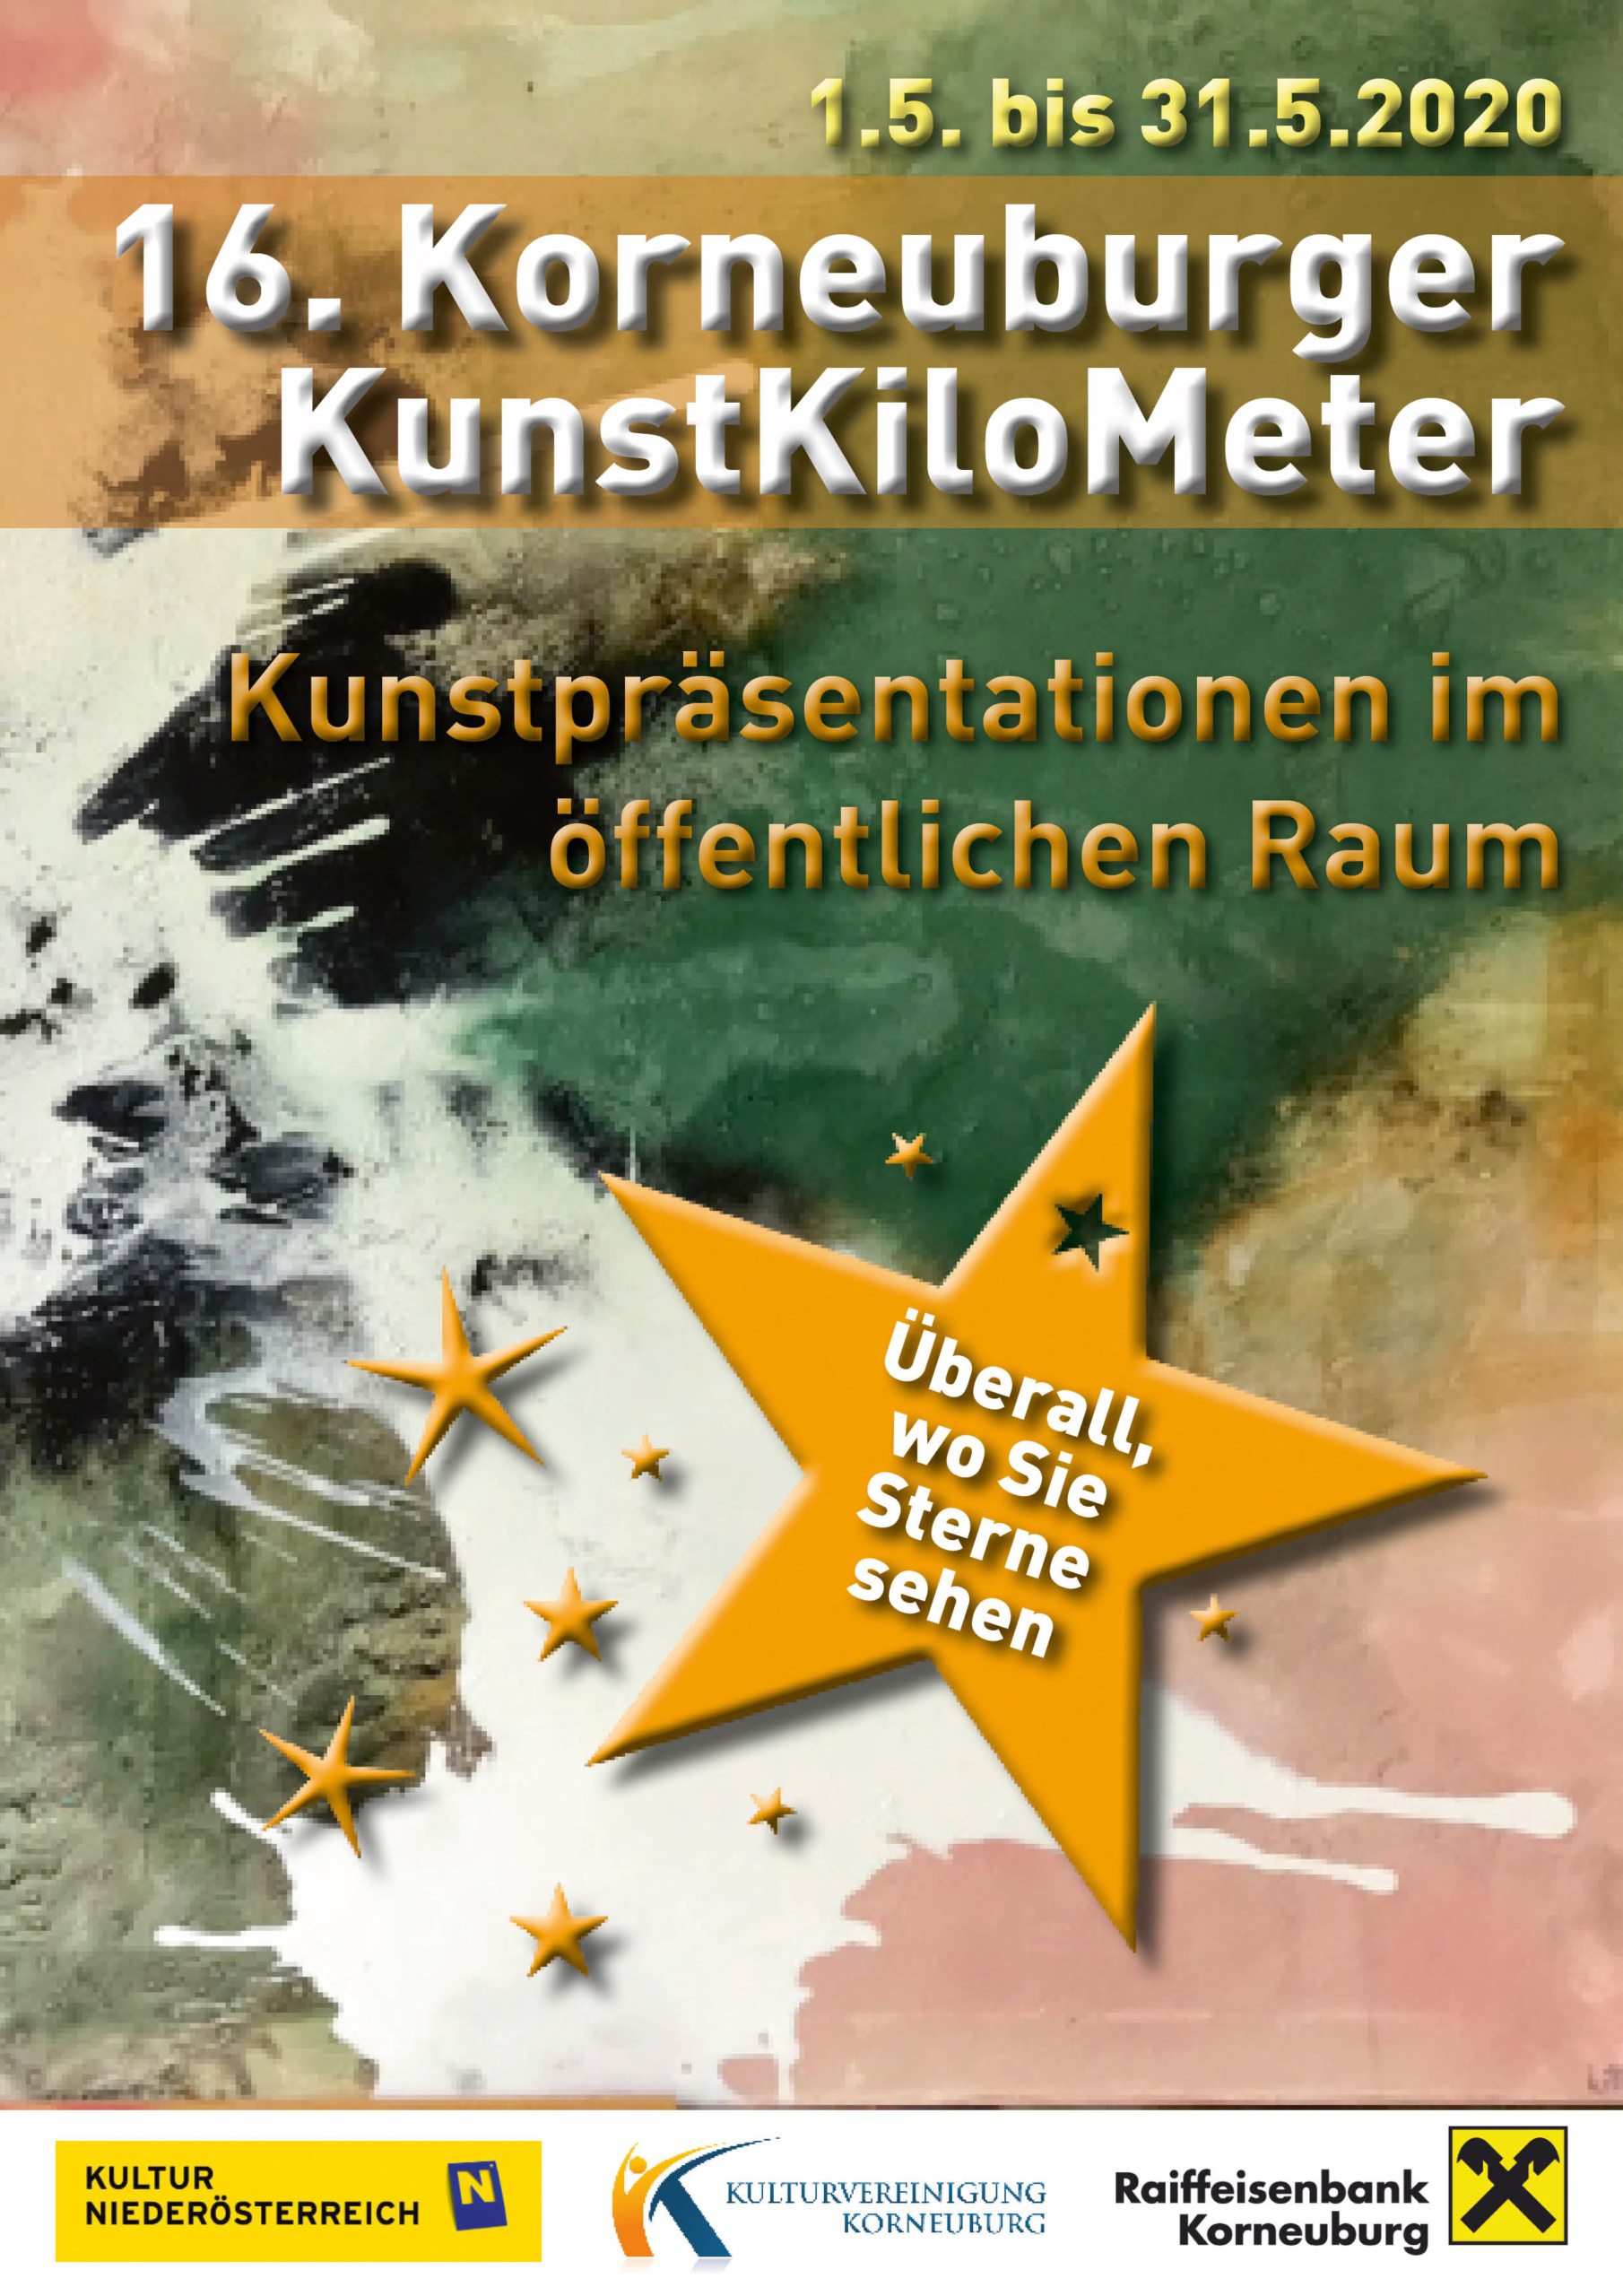 16. Korneuburger KunstKiloMeter